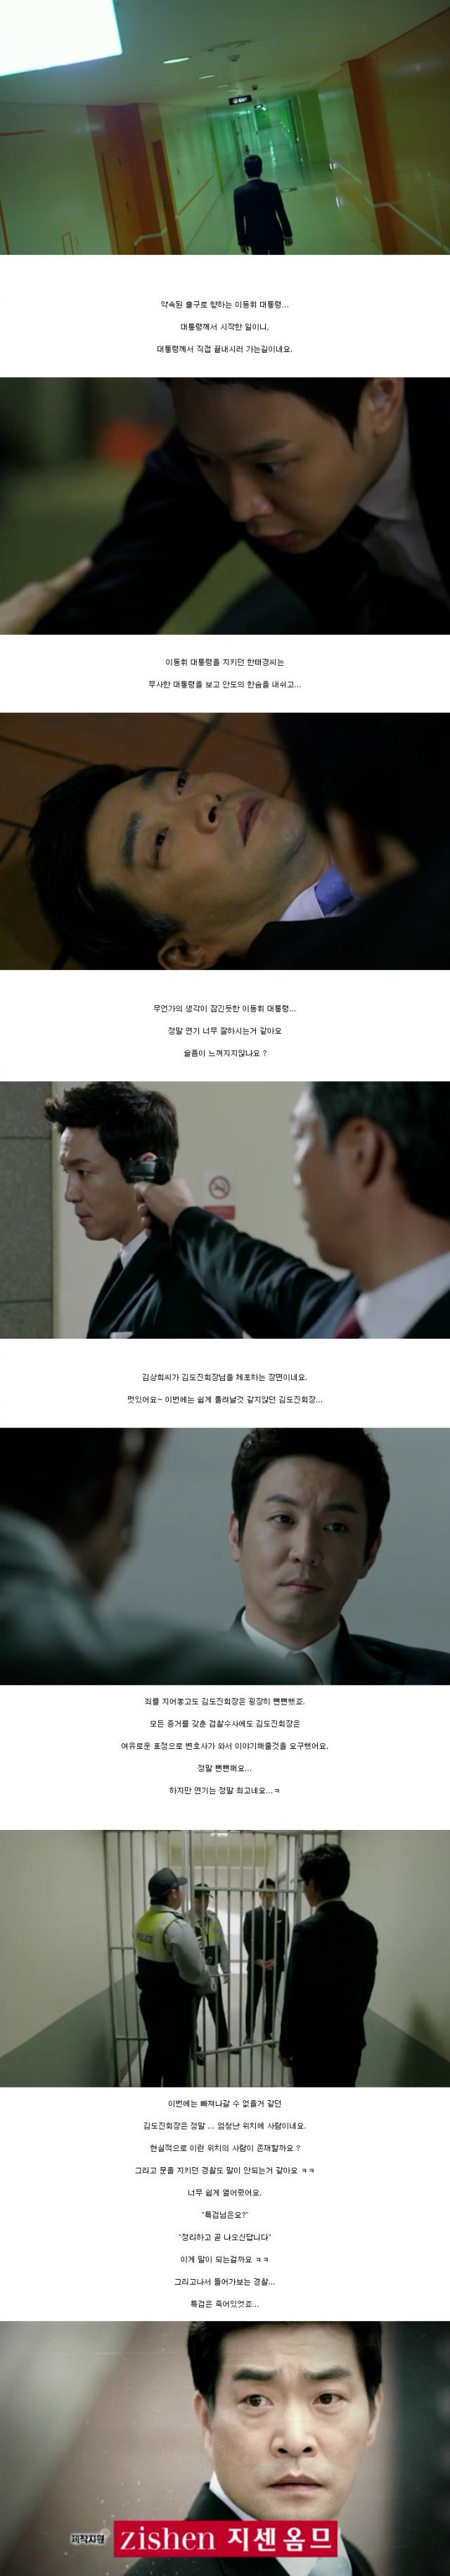 episode 15 captures for the Korean drama 'Three Days'